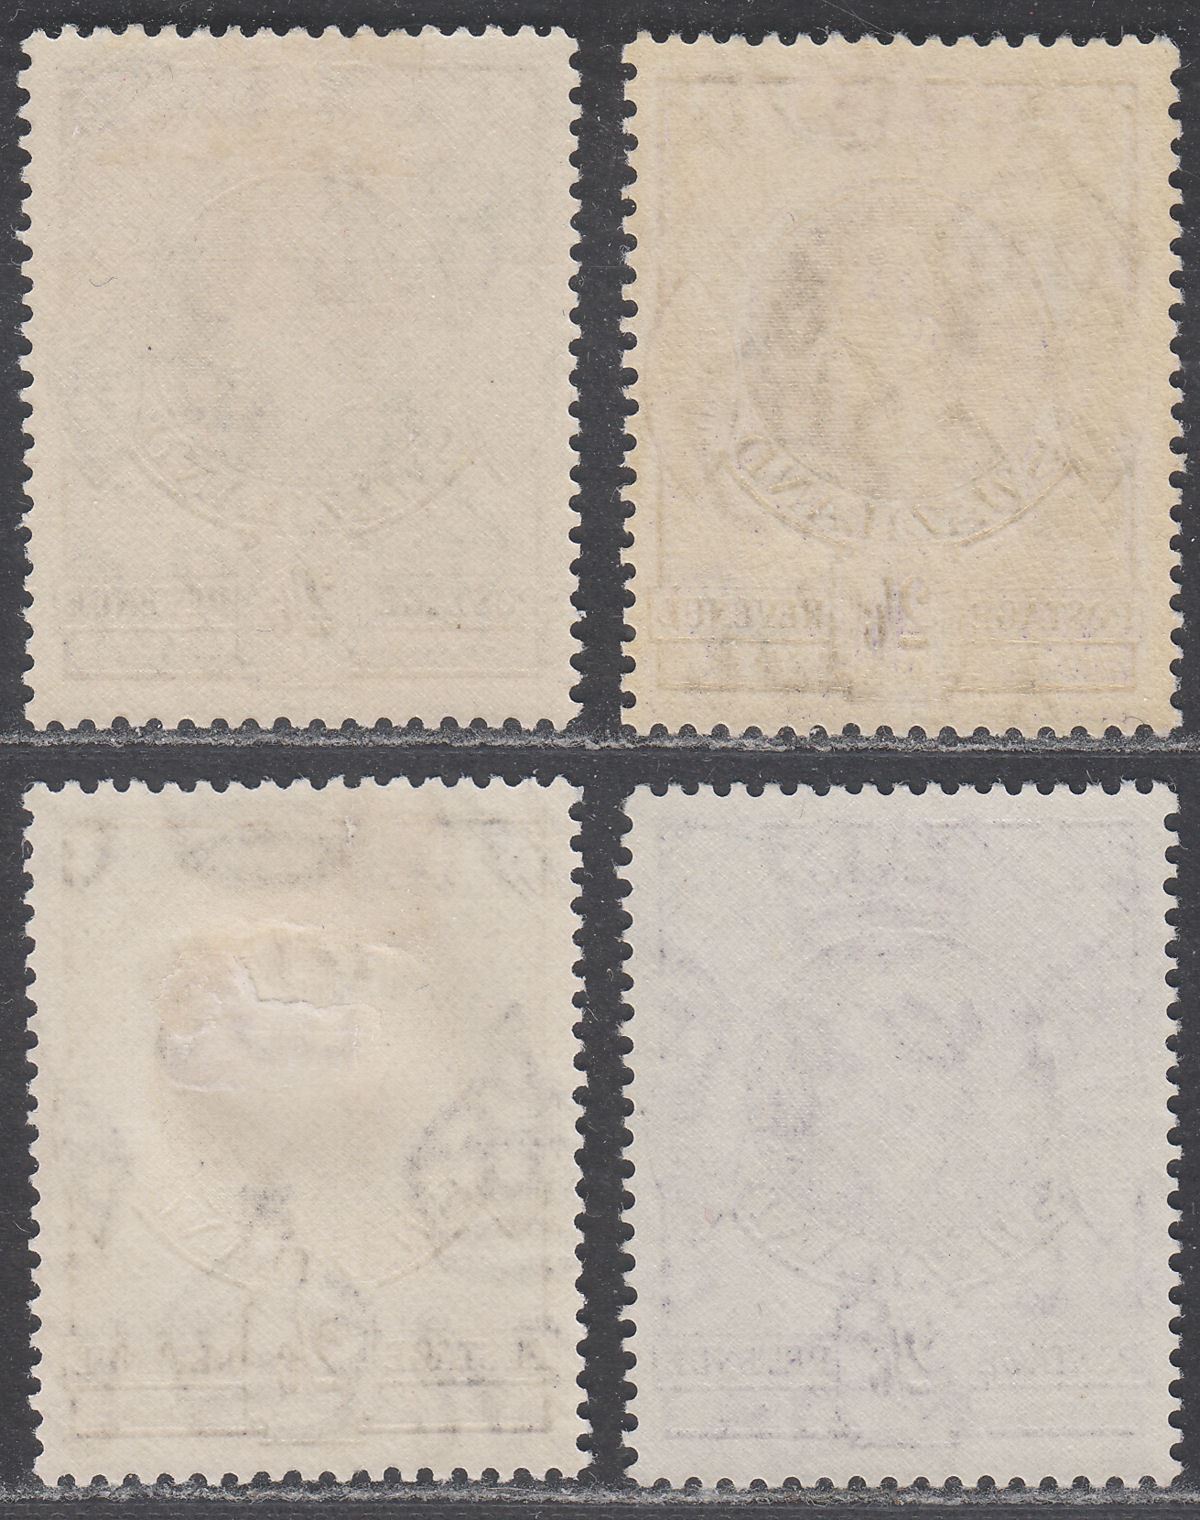 Swaziland 1938-47 KGVI 2sh6d Violet p13½x13, p13½x14 Shades Mint SG36-36b